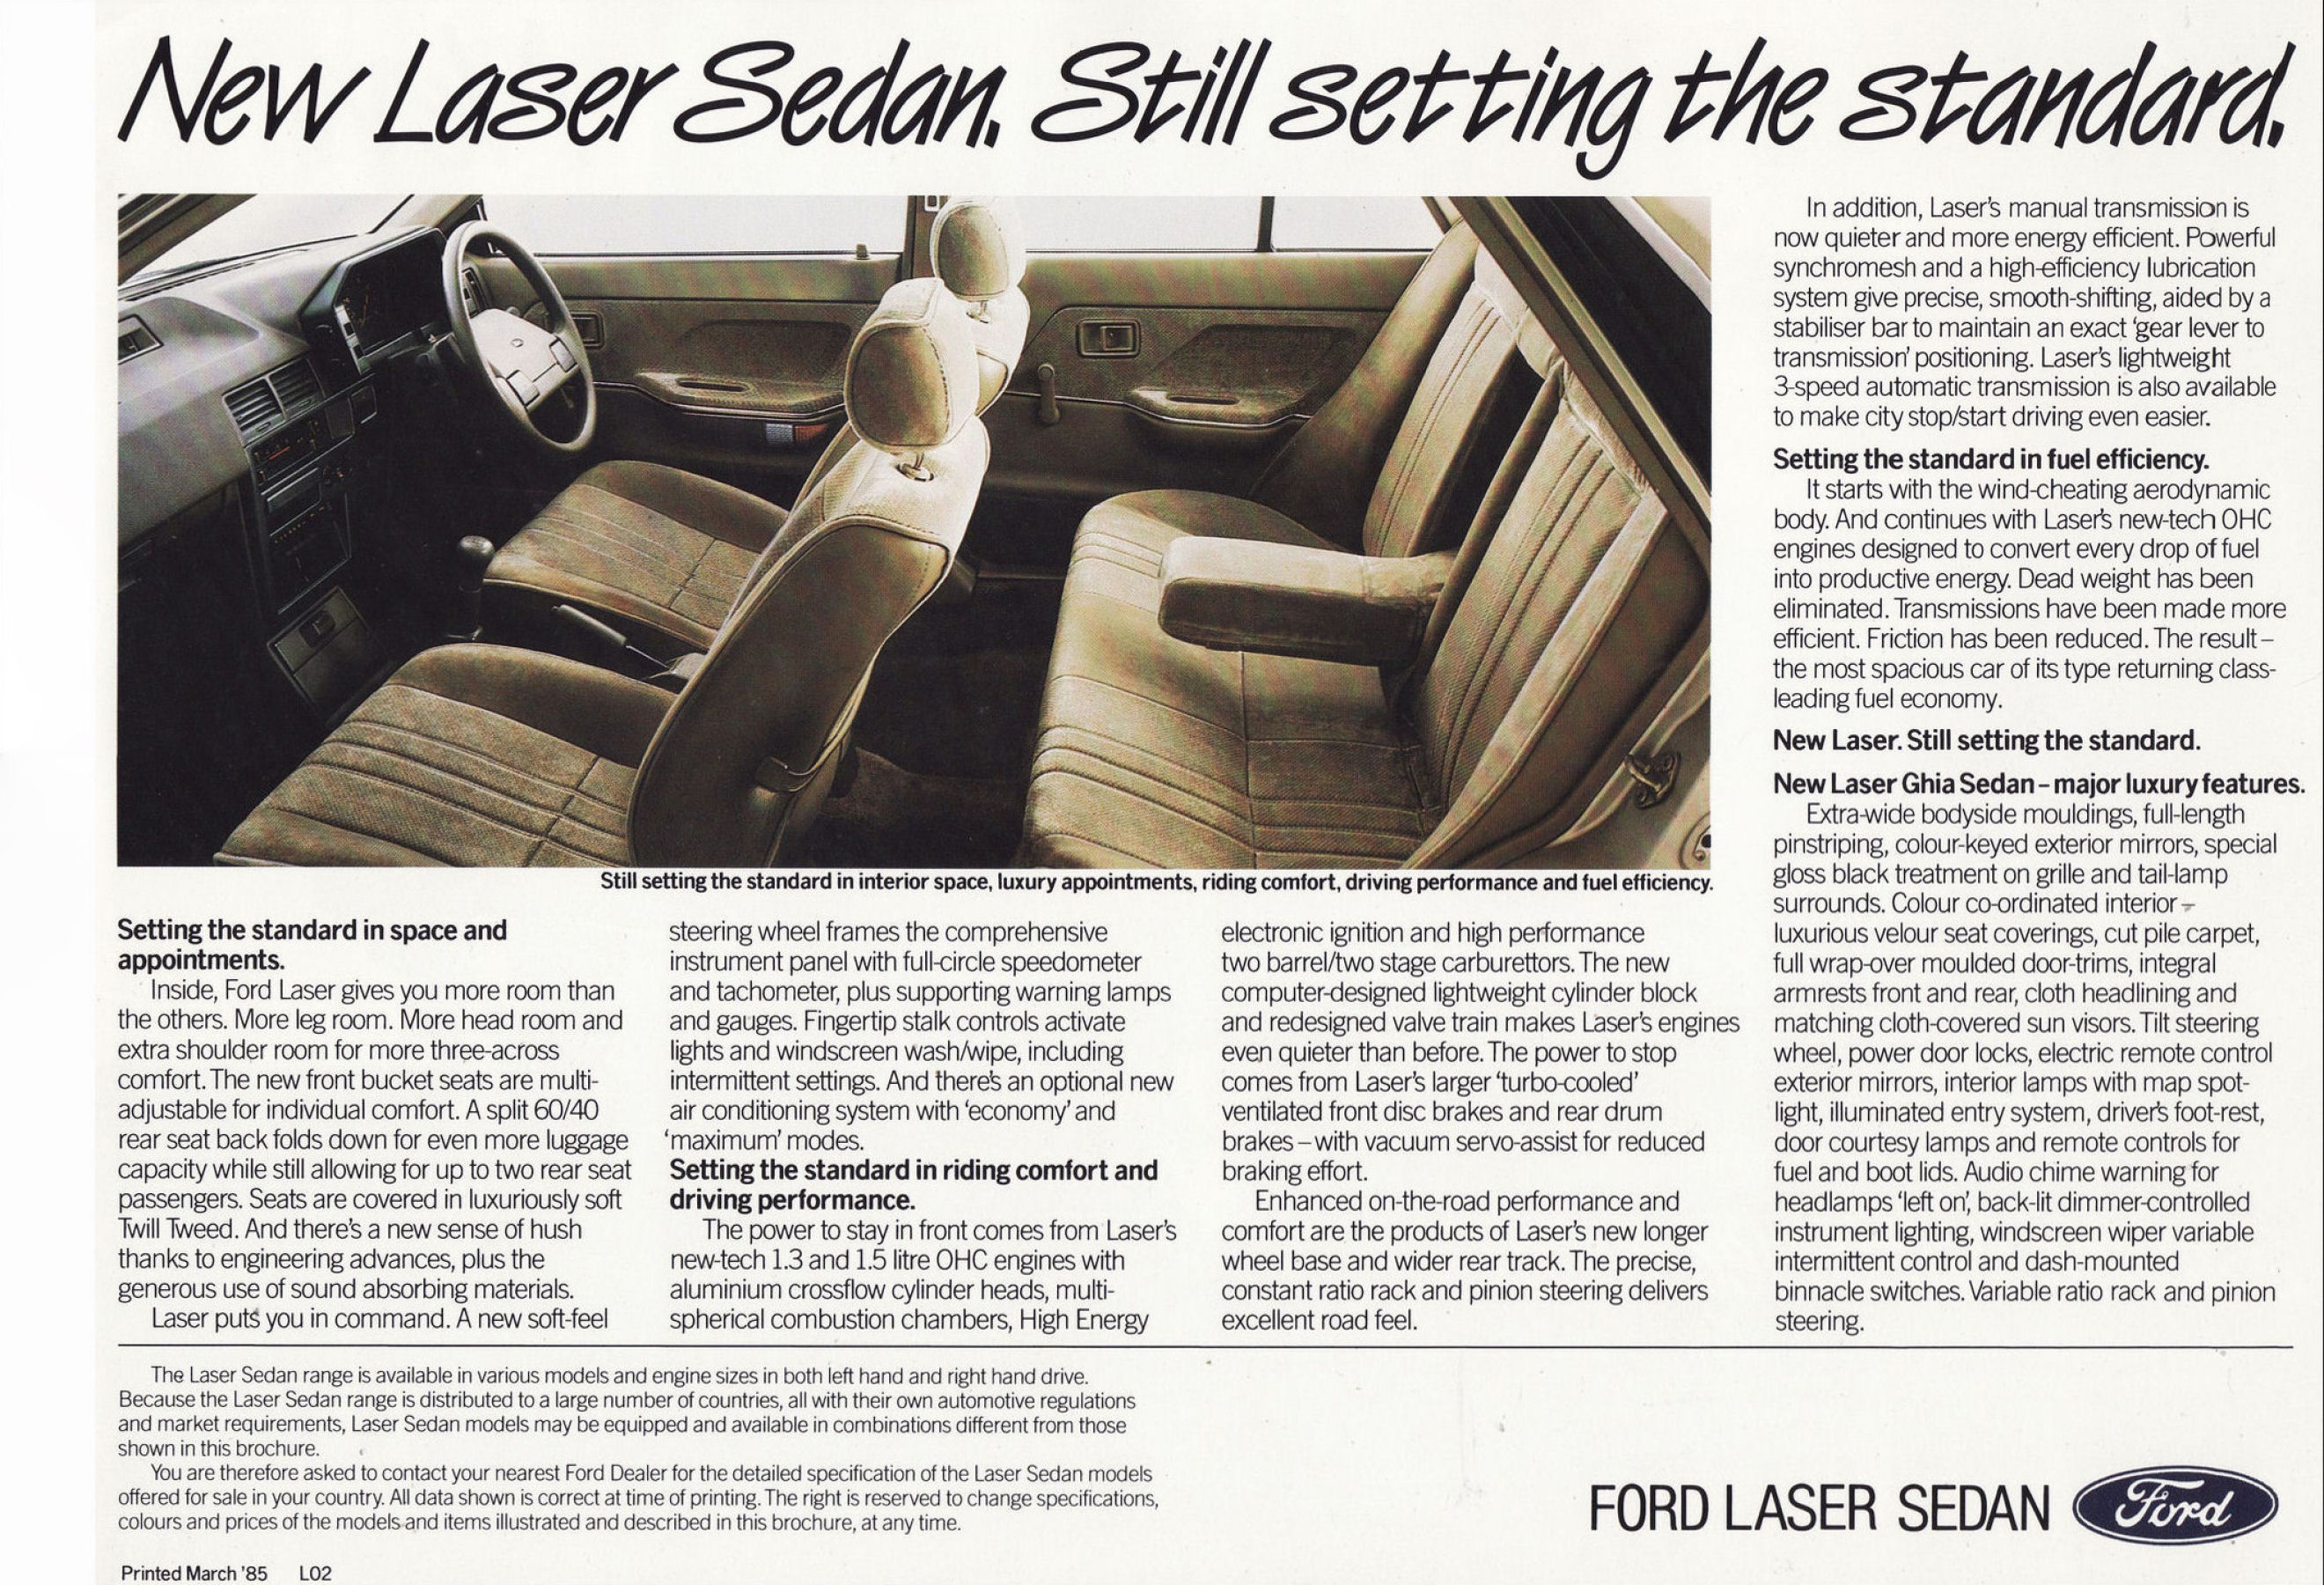 1985_Ford_KC_Laser_Sedan_Sheet-02